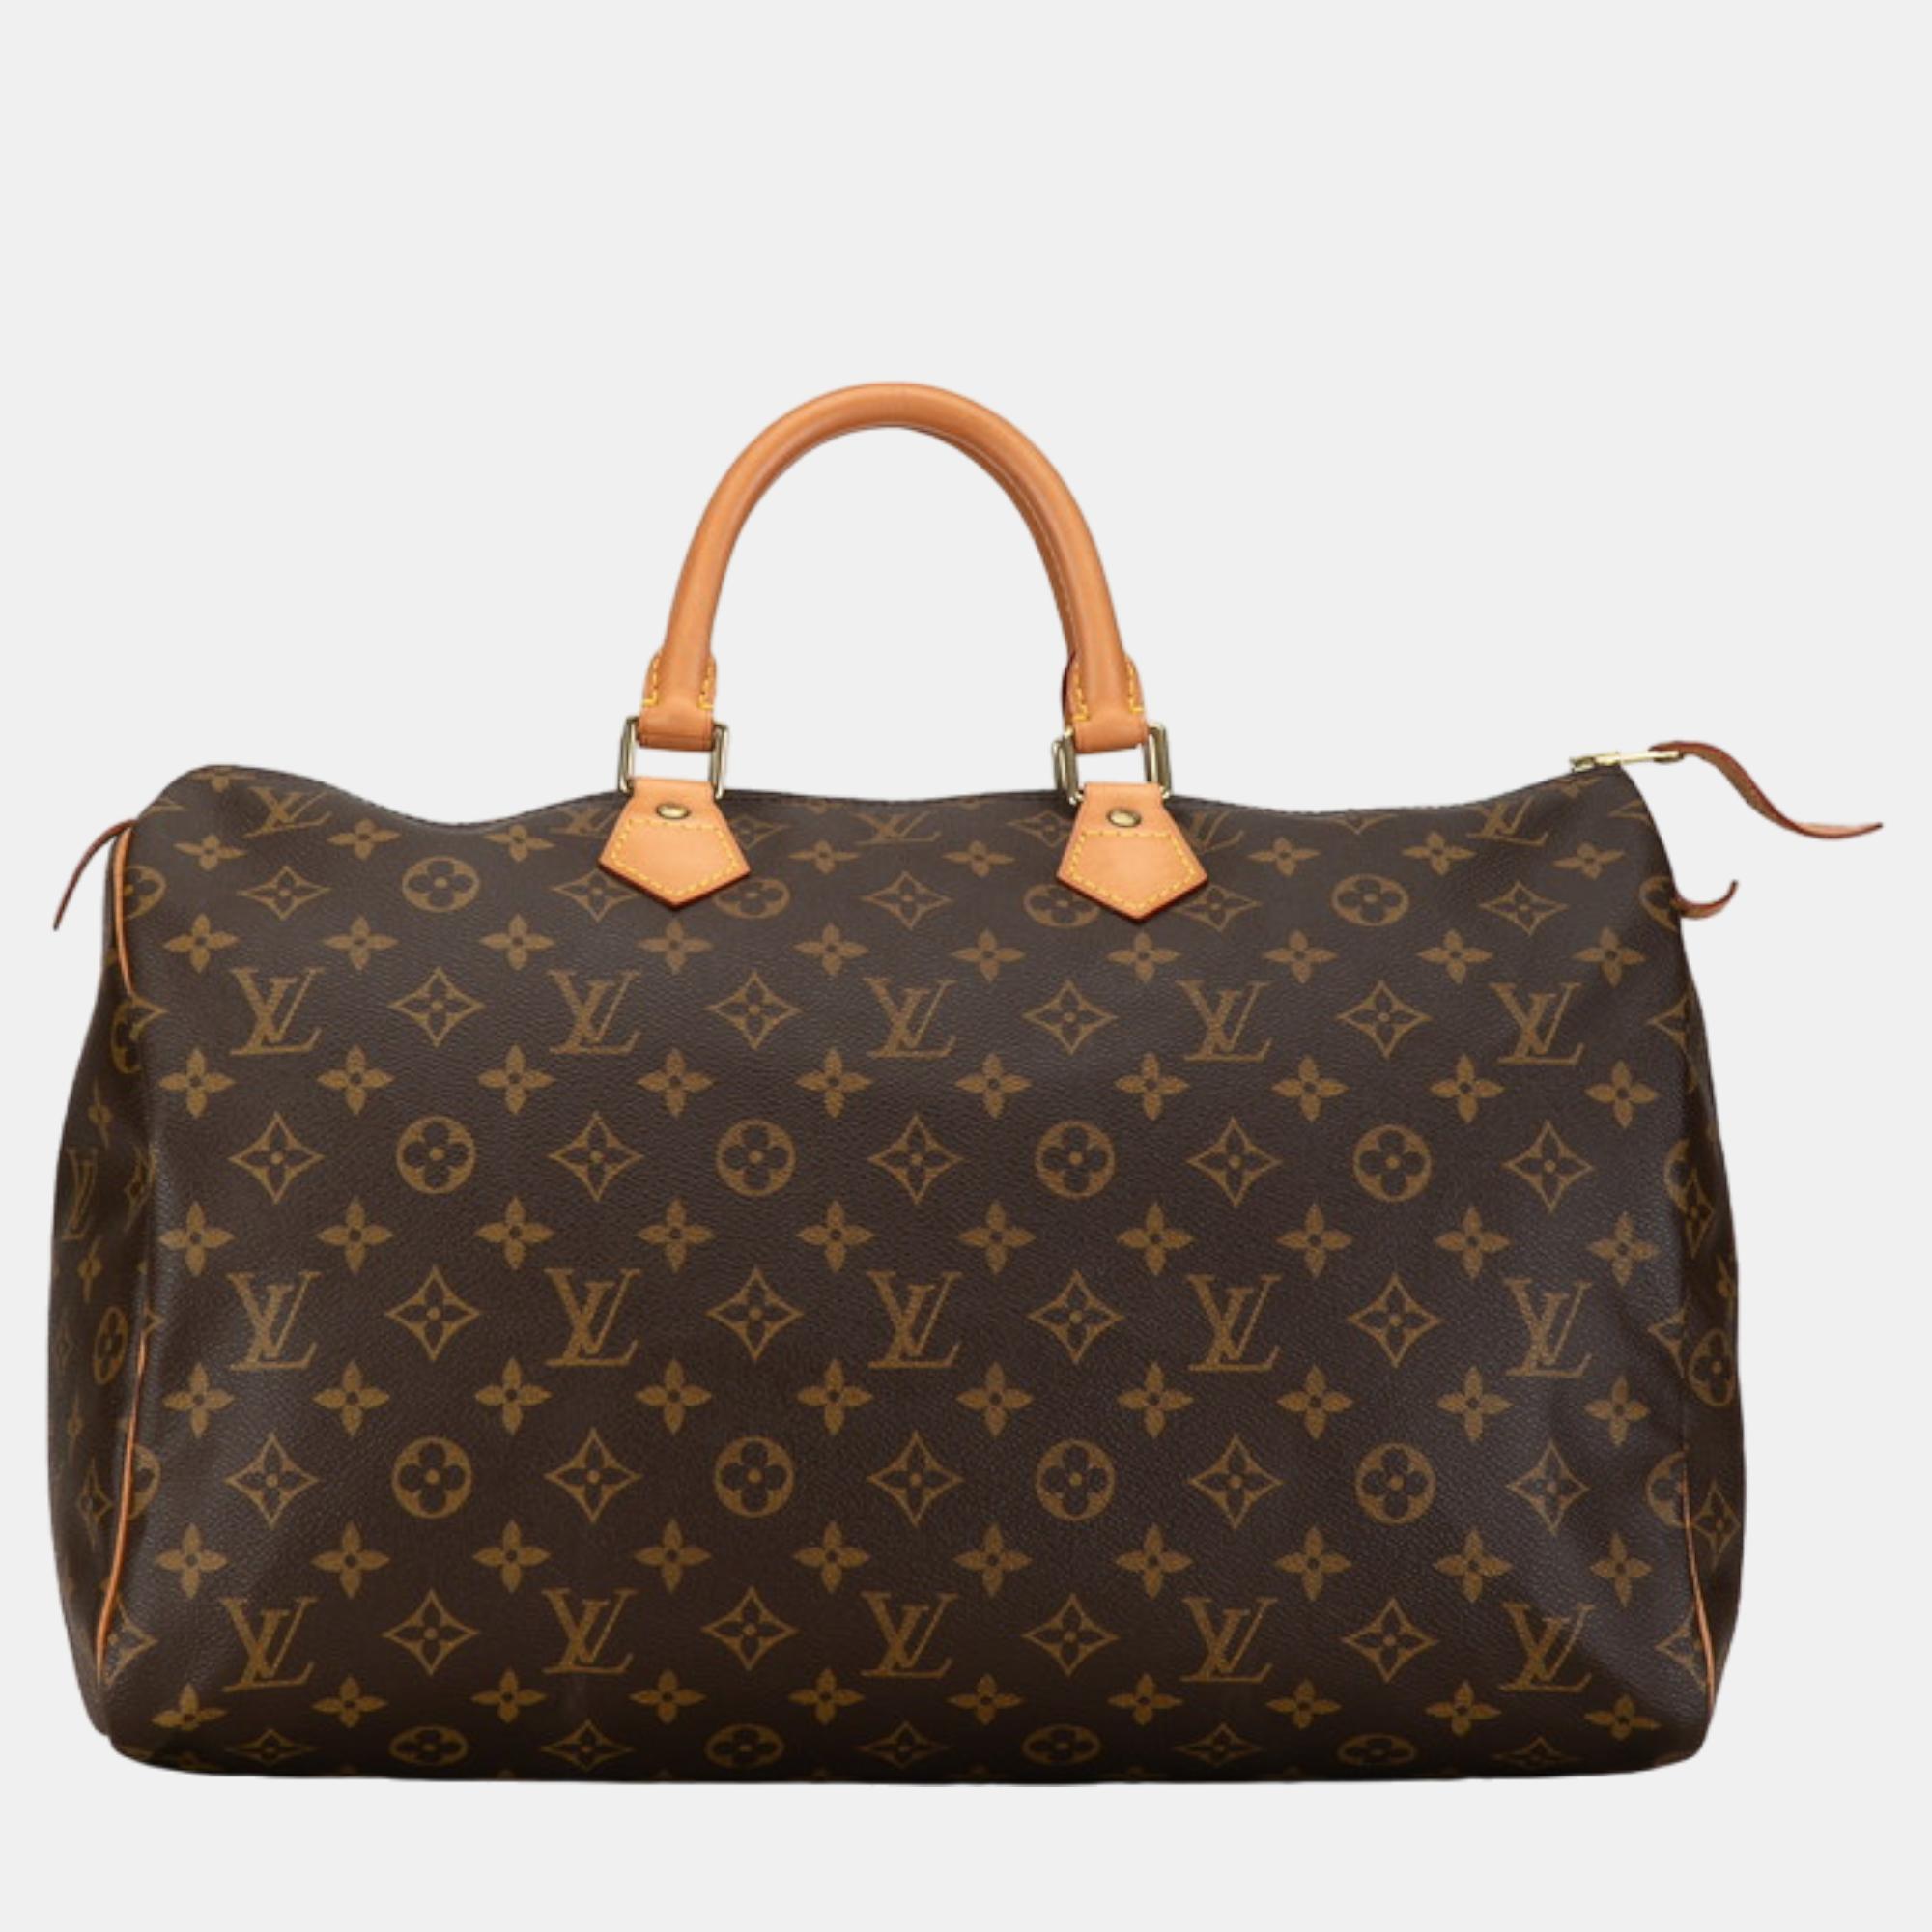 Louis vuitton brown monogram canvas speedy 40 handbag